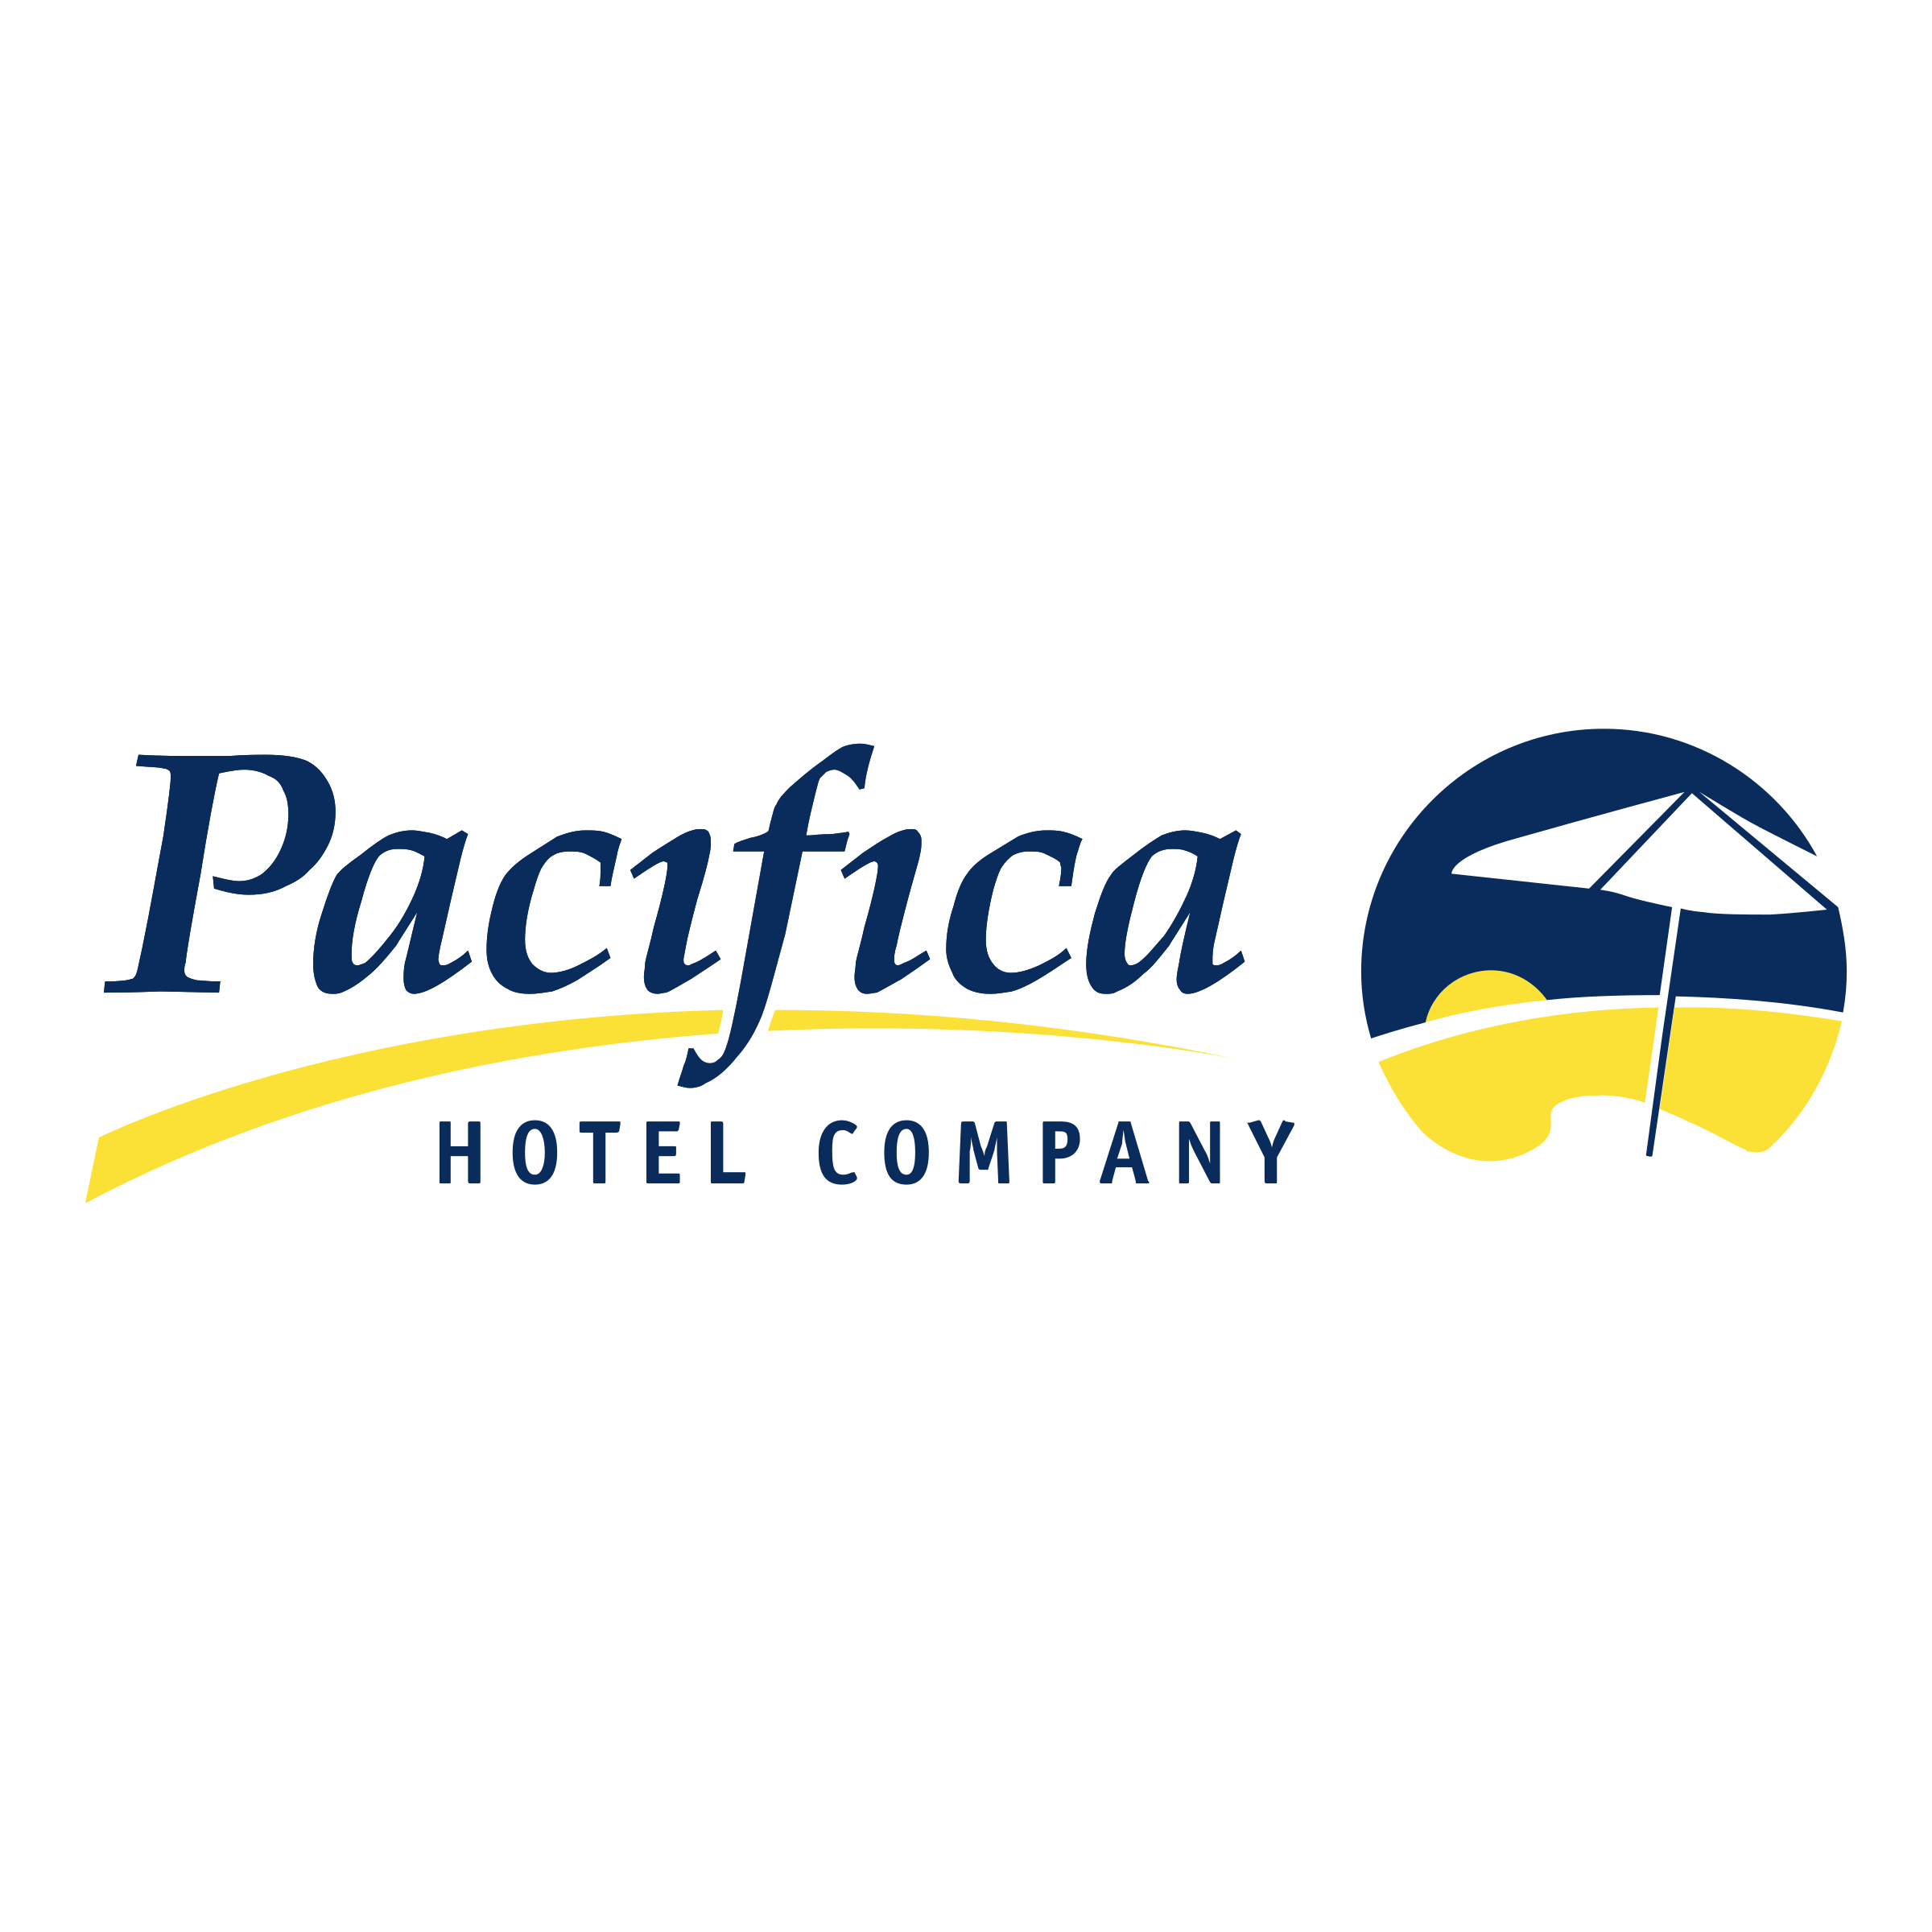 Pacifica Logo - Pacifica Hotel Company Logo PNG Transparent & SVG Vector - Freebie ...